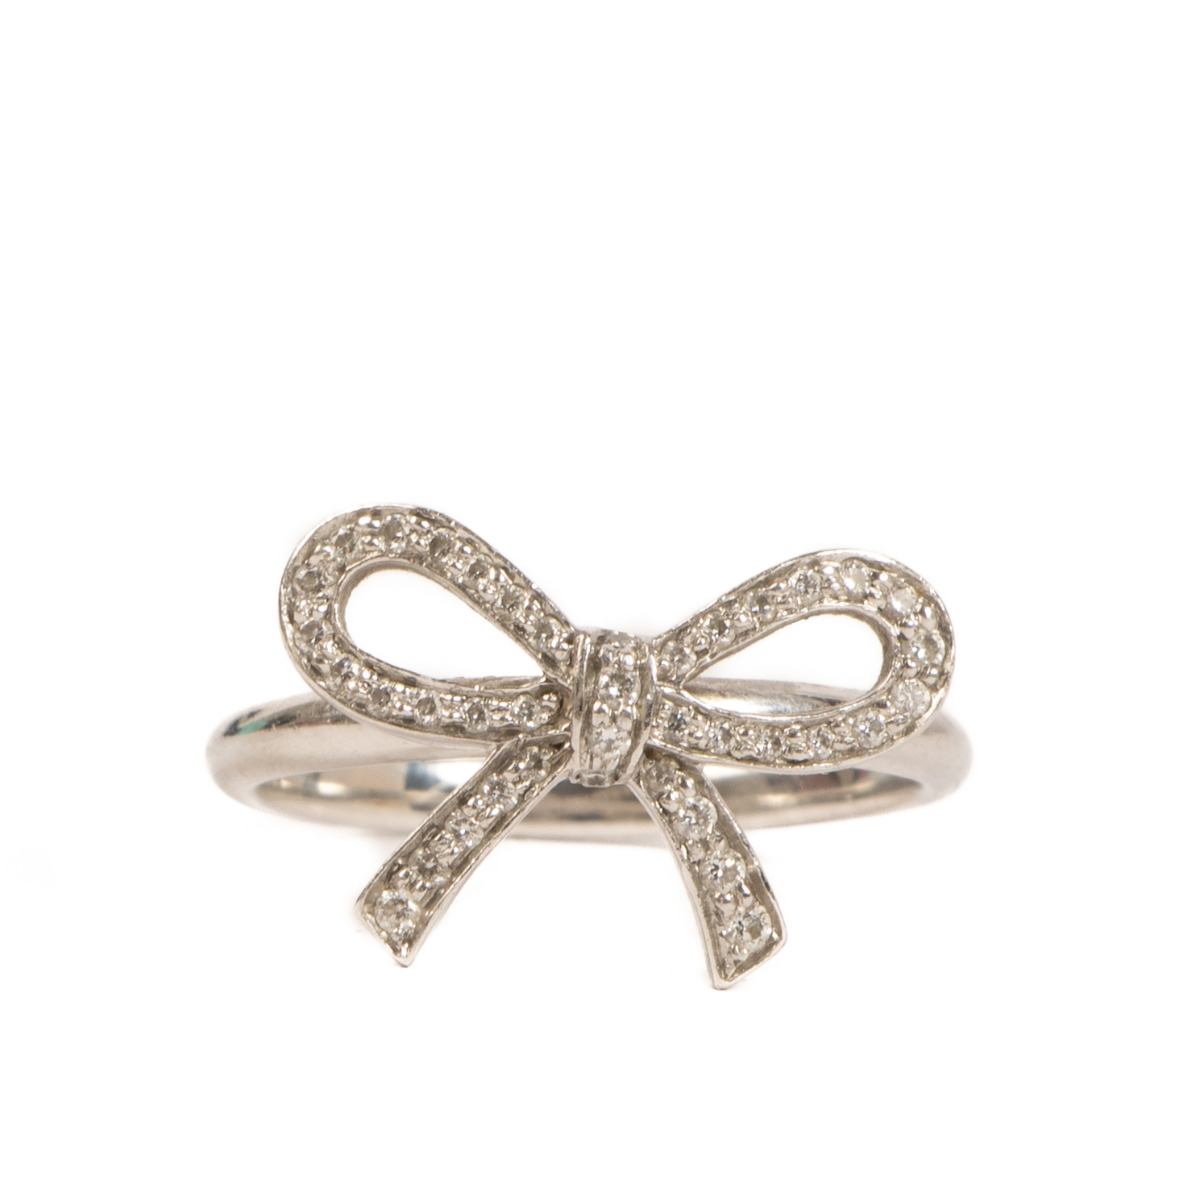 Tiffany Ribbon Bow ring with aquamarine🤟 #tiffanyemployee #tiffanyandco # tiffany #tiffanyblue #aquamarine #luxury #luxuryring #tiffanyring  #tiffanyrings... | By Anna Liu at Tiffany & CO.Facebook